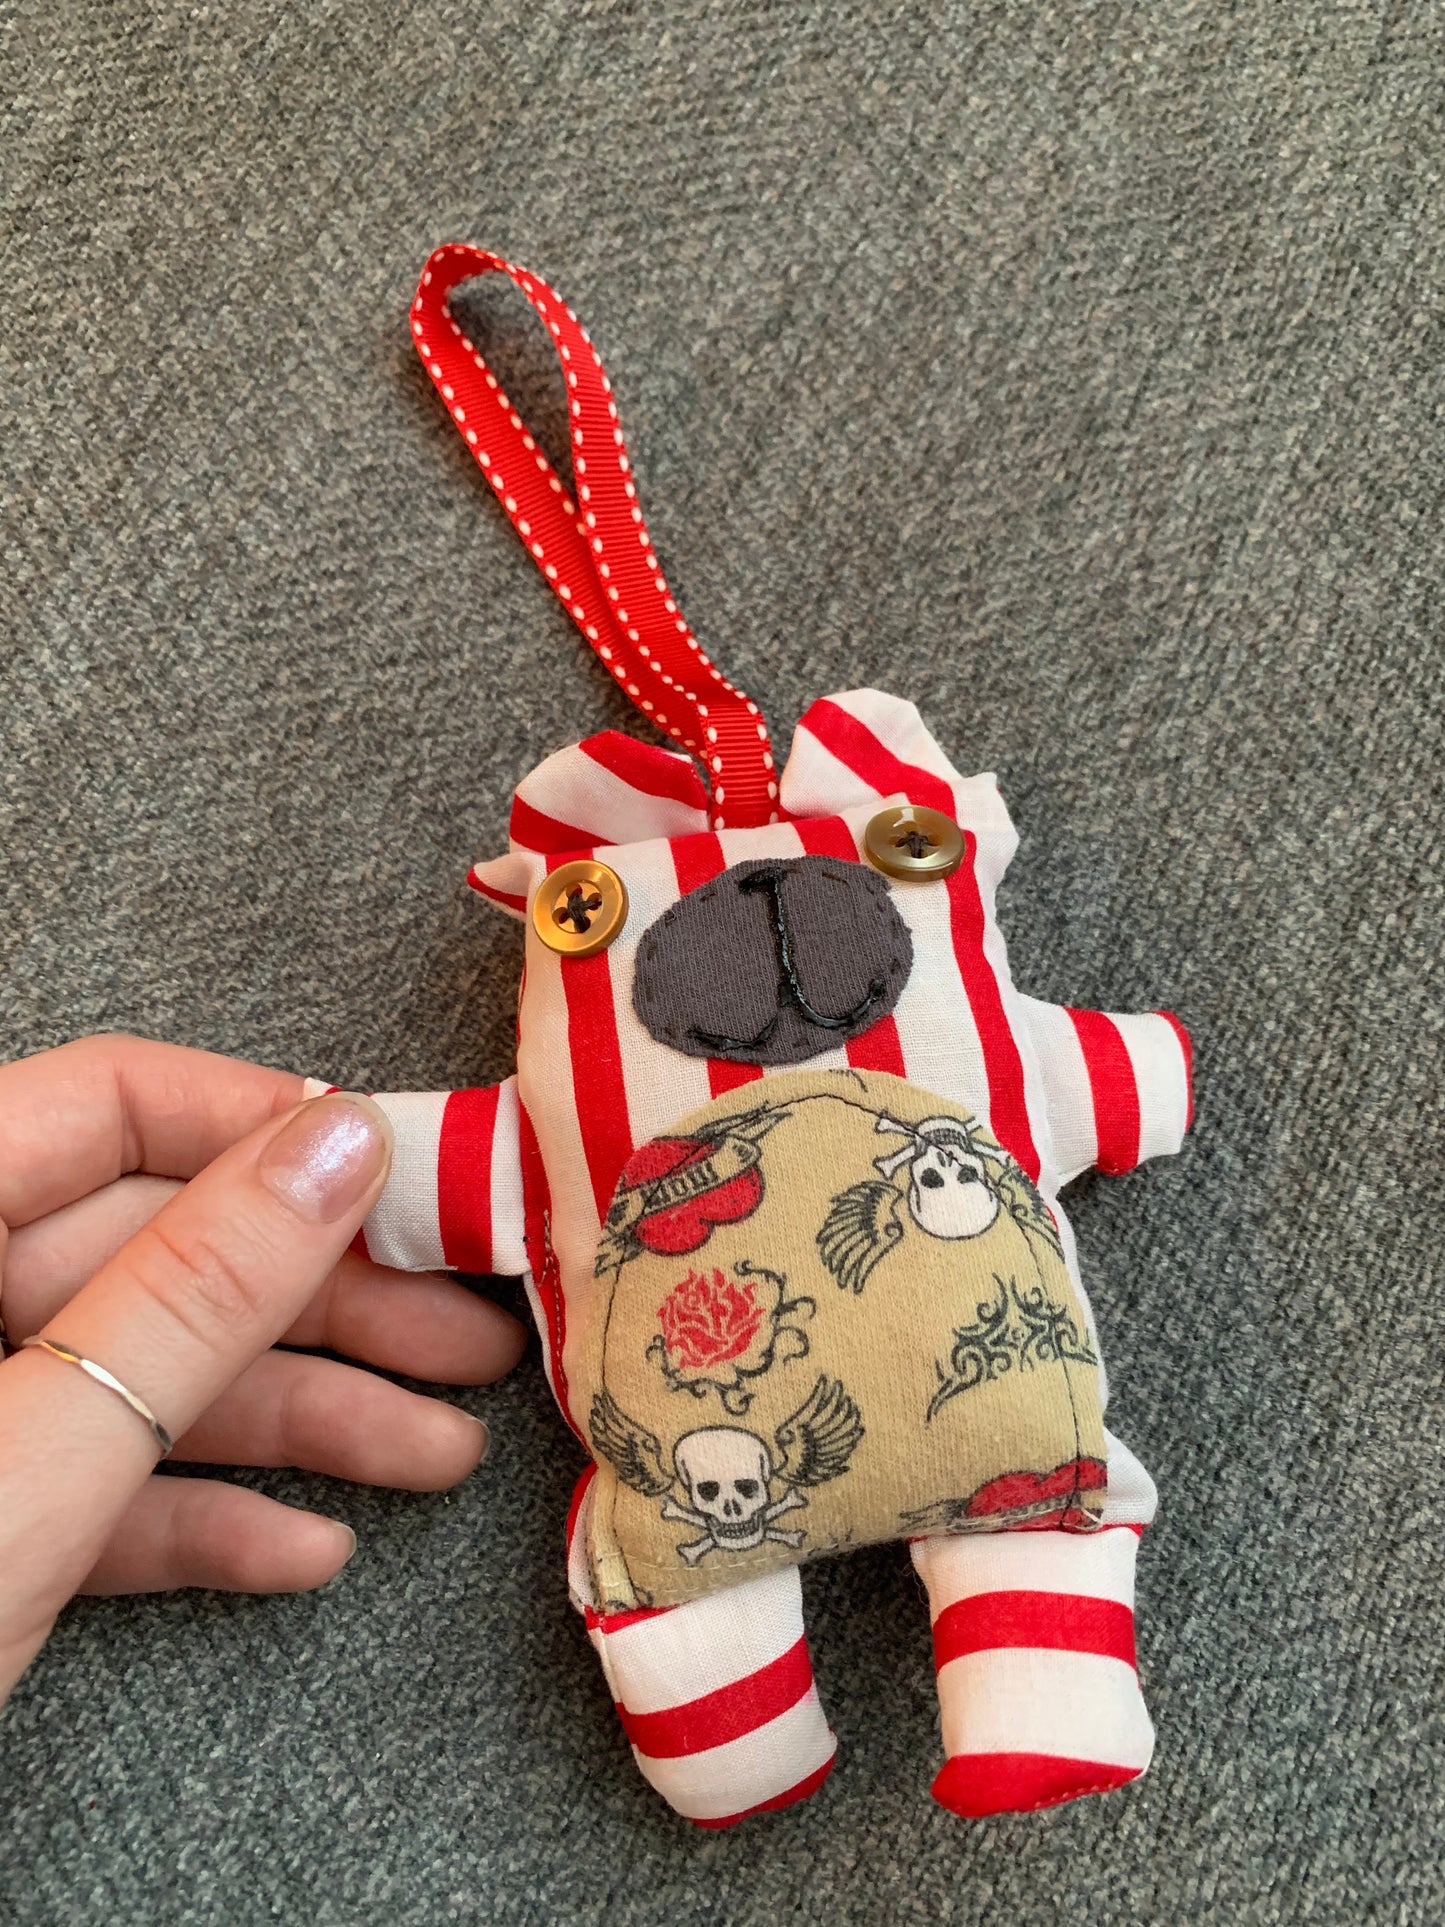 Mini Animal Friend - Bear - Keychain, Ornament, Backpack Charm